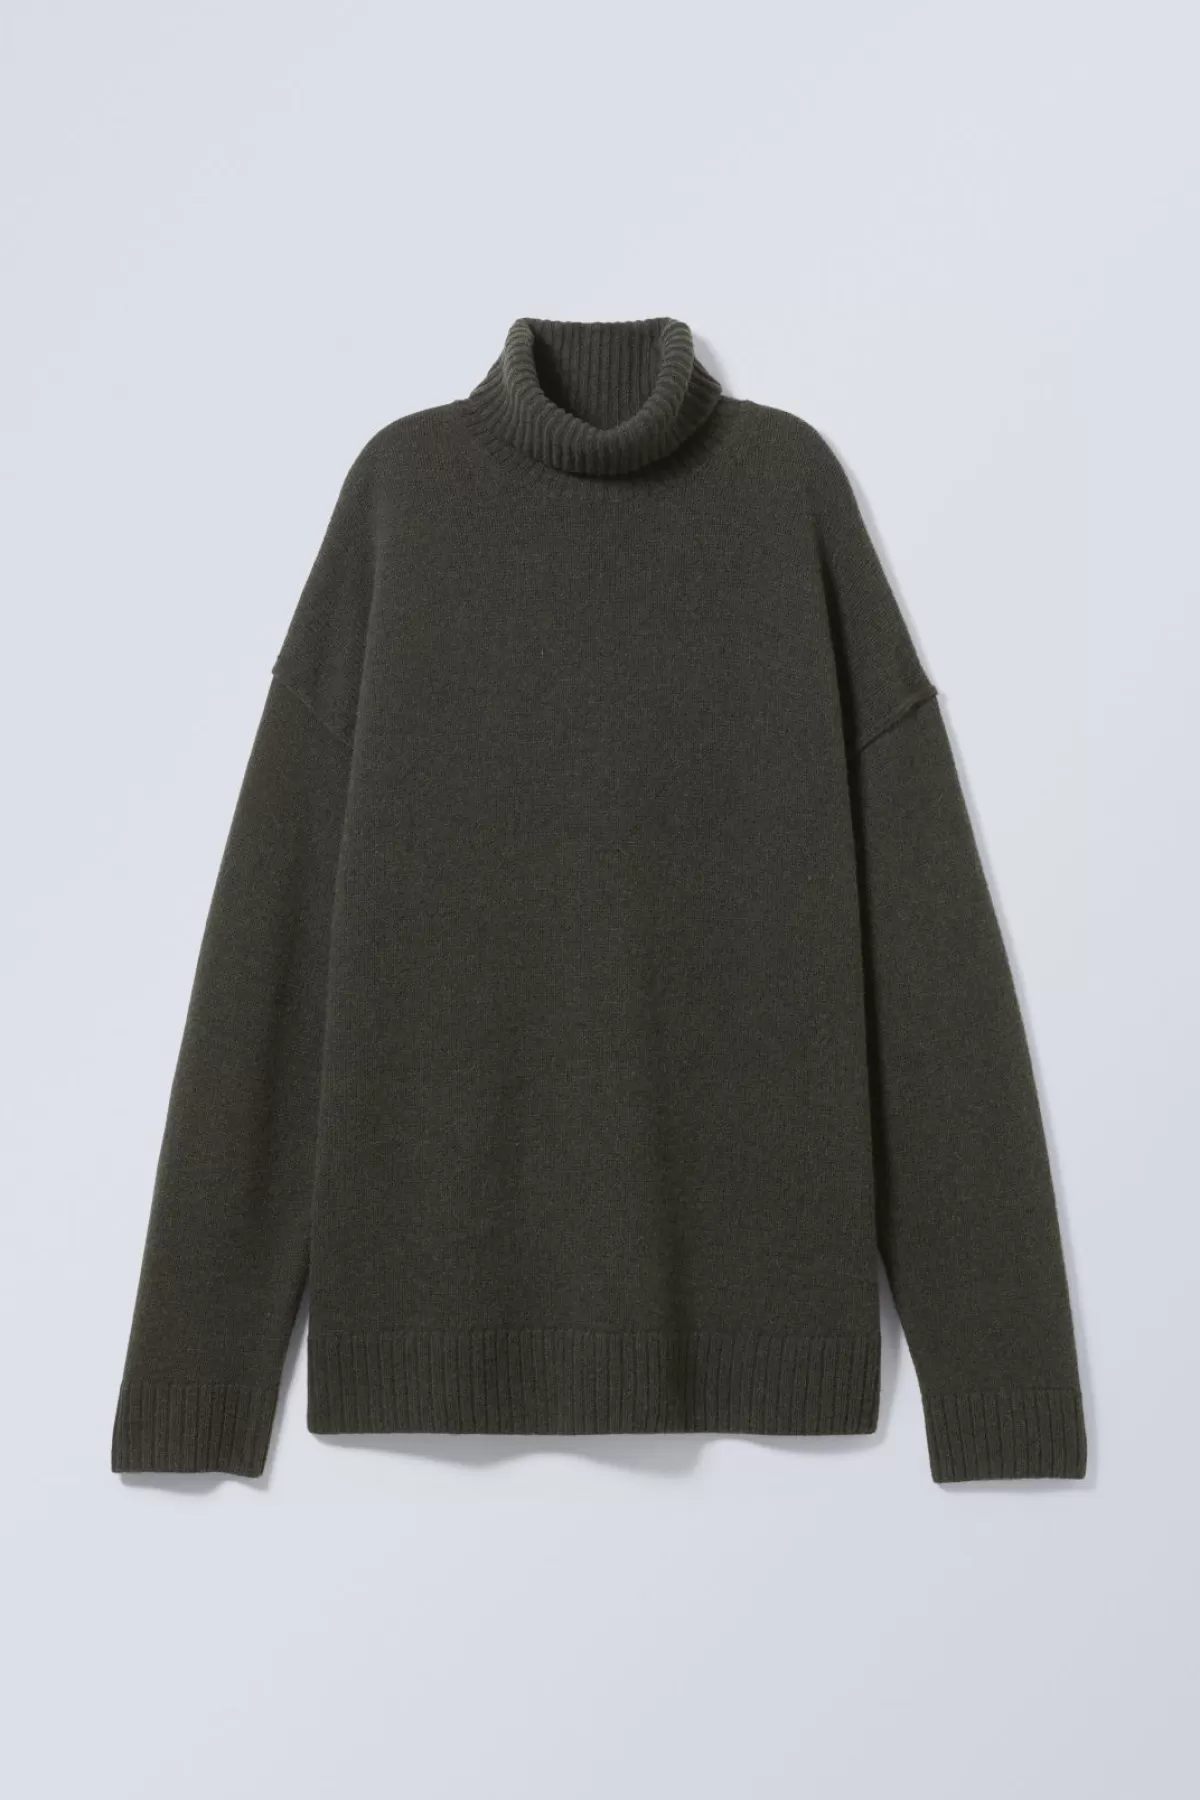 Weekday Eloise Wool Turtleneck Sweater Dark Green Clearance